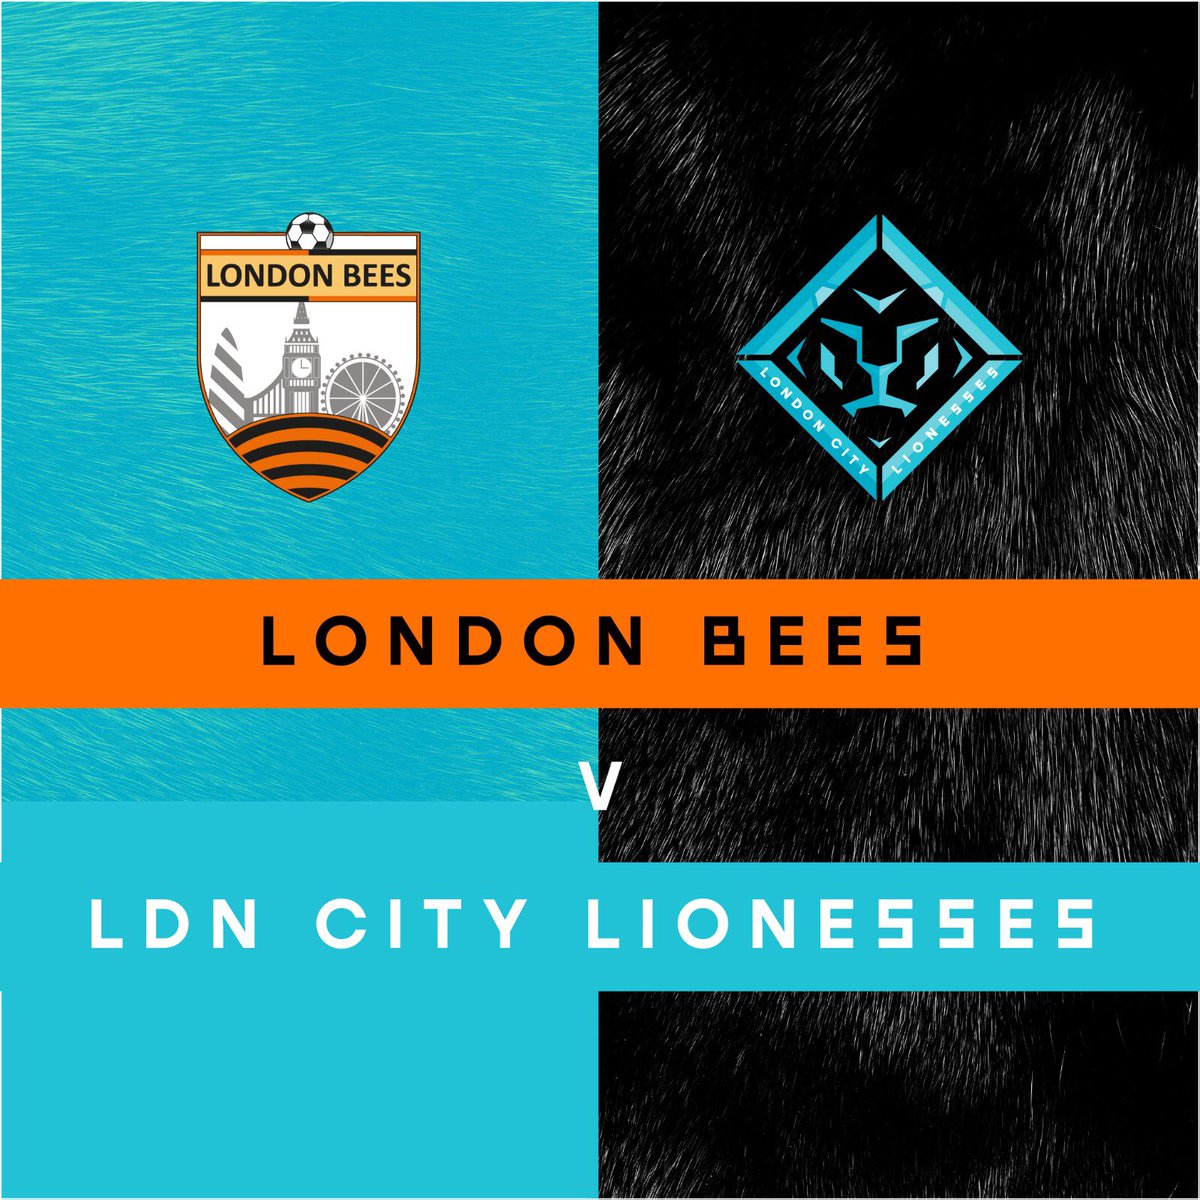 Can’t wait to kick the new season off tomorrow vs London bees 👀 #LondonCityLionesses   

New beginnings start tomorrow.